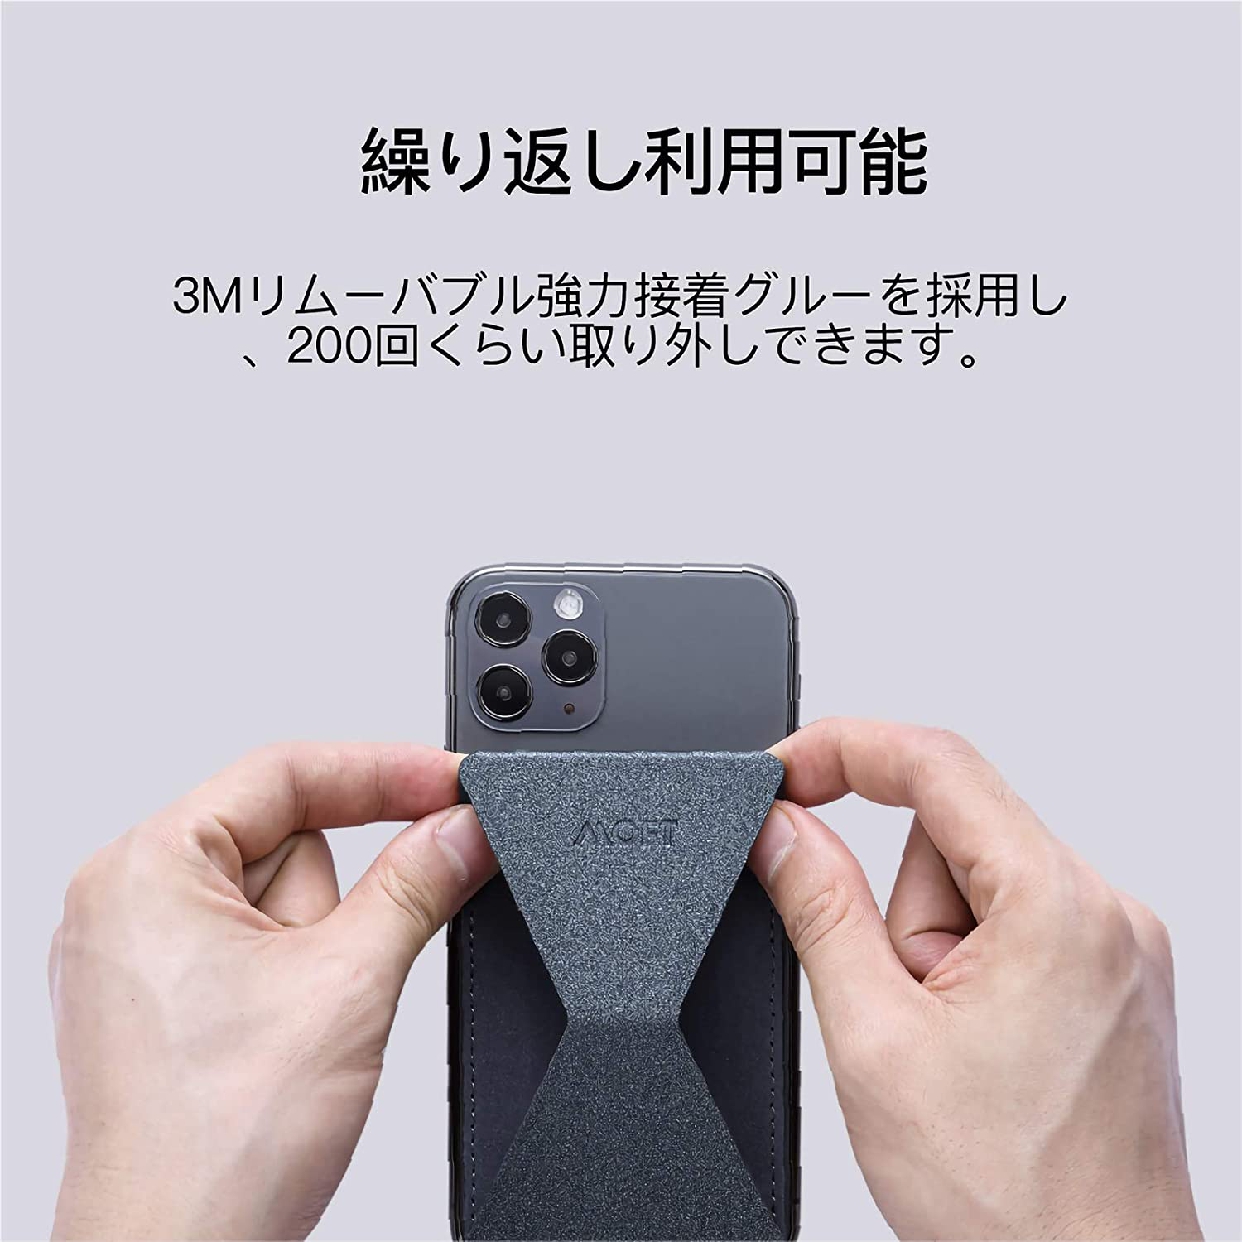 MOFT(モフト) MOFT X Adhesive Phone Standの商品画像サムネ5 